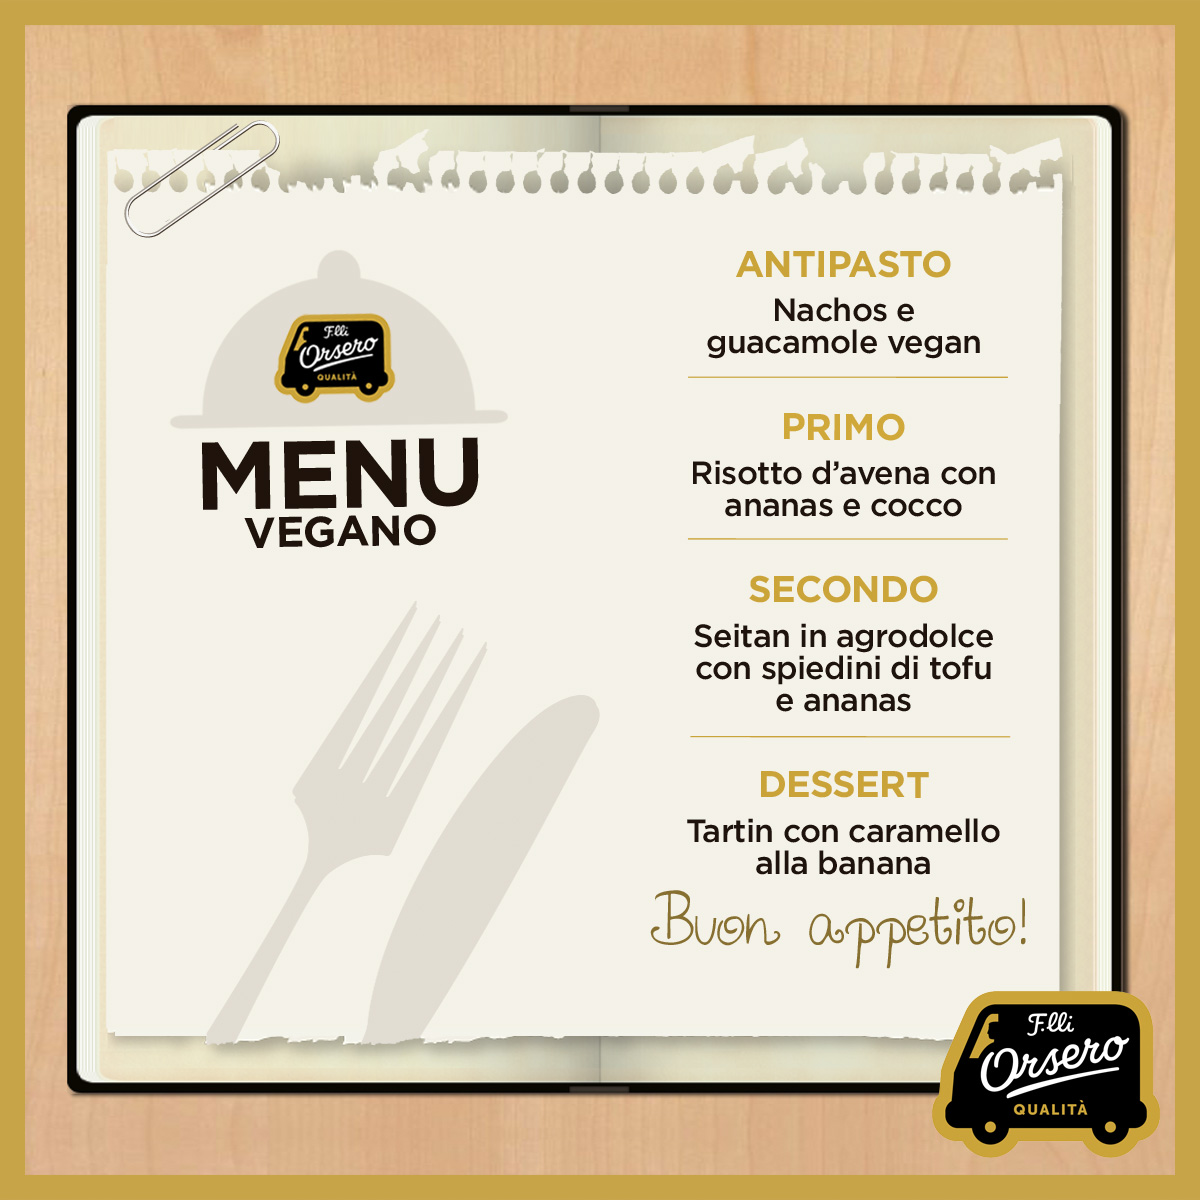 20150410 orsero menu VEGANO